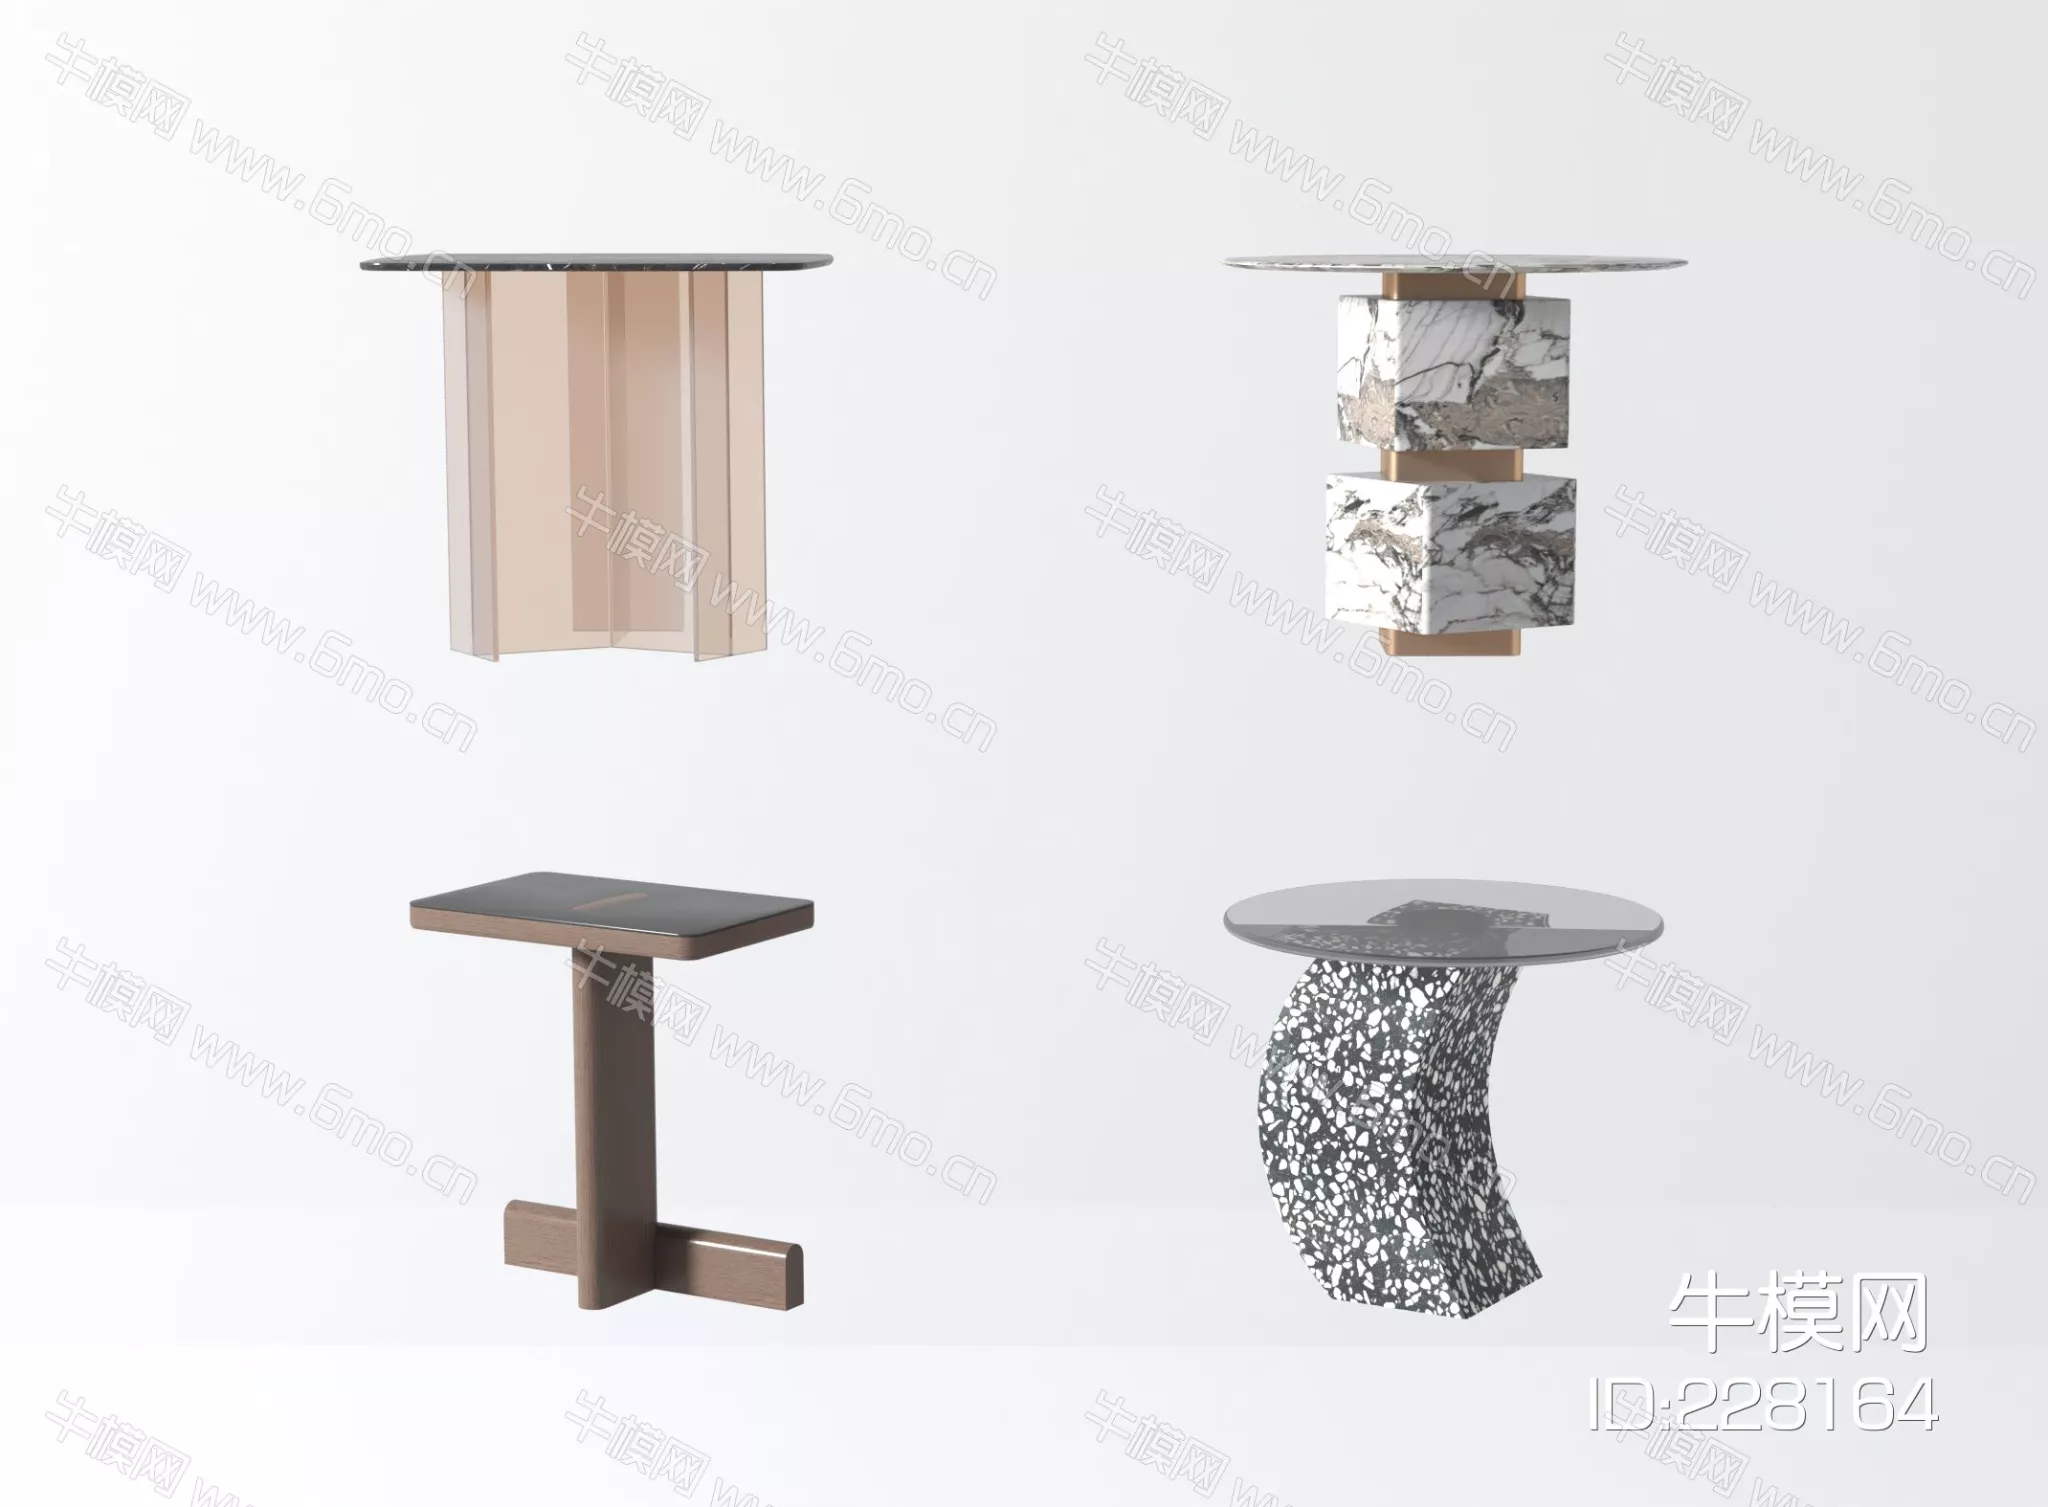 MODERN SIDE TABLE - SKETCHUP 3D MODEL - VRAY - 228164